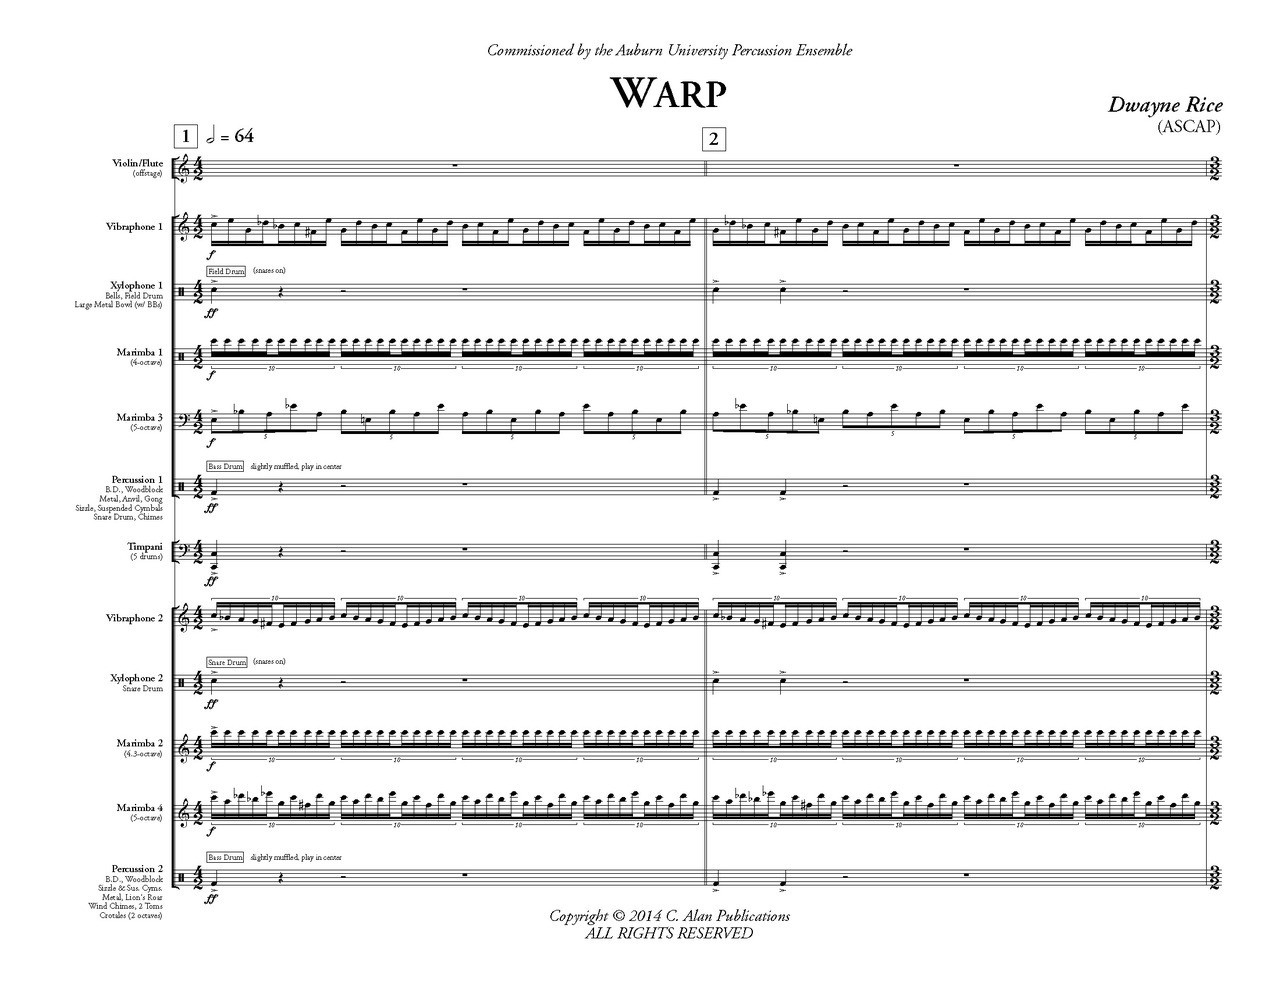 Warp by Wayne Rice